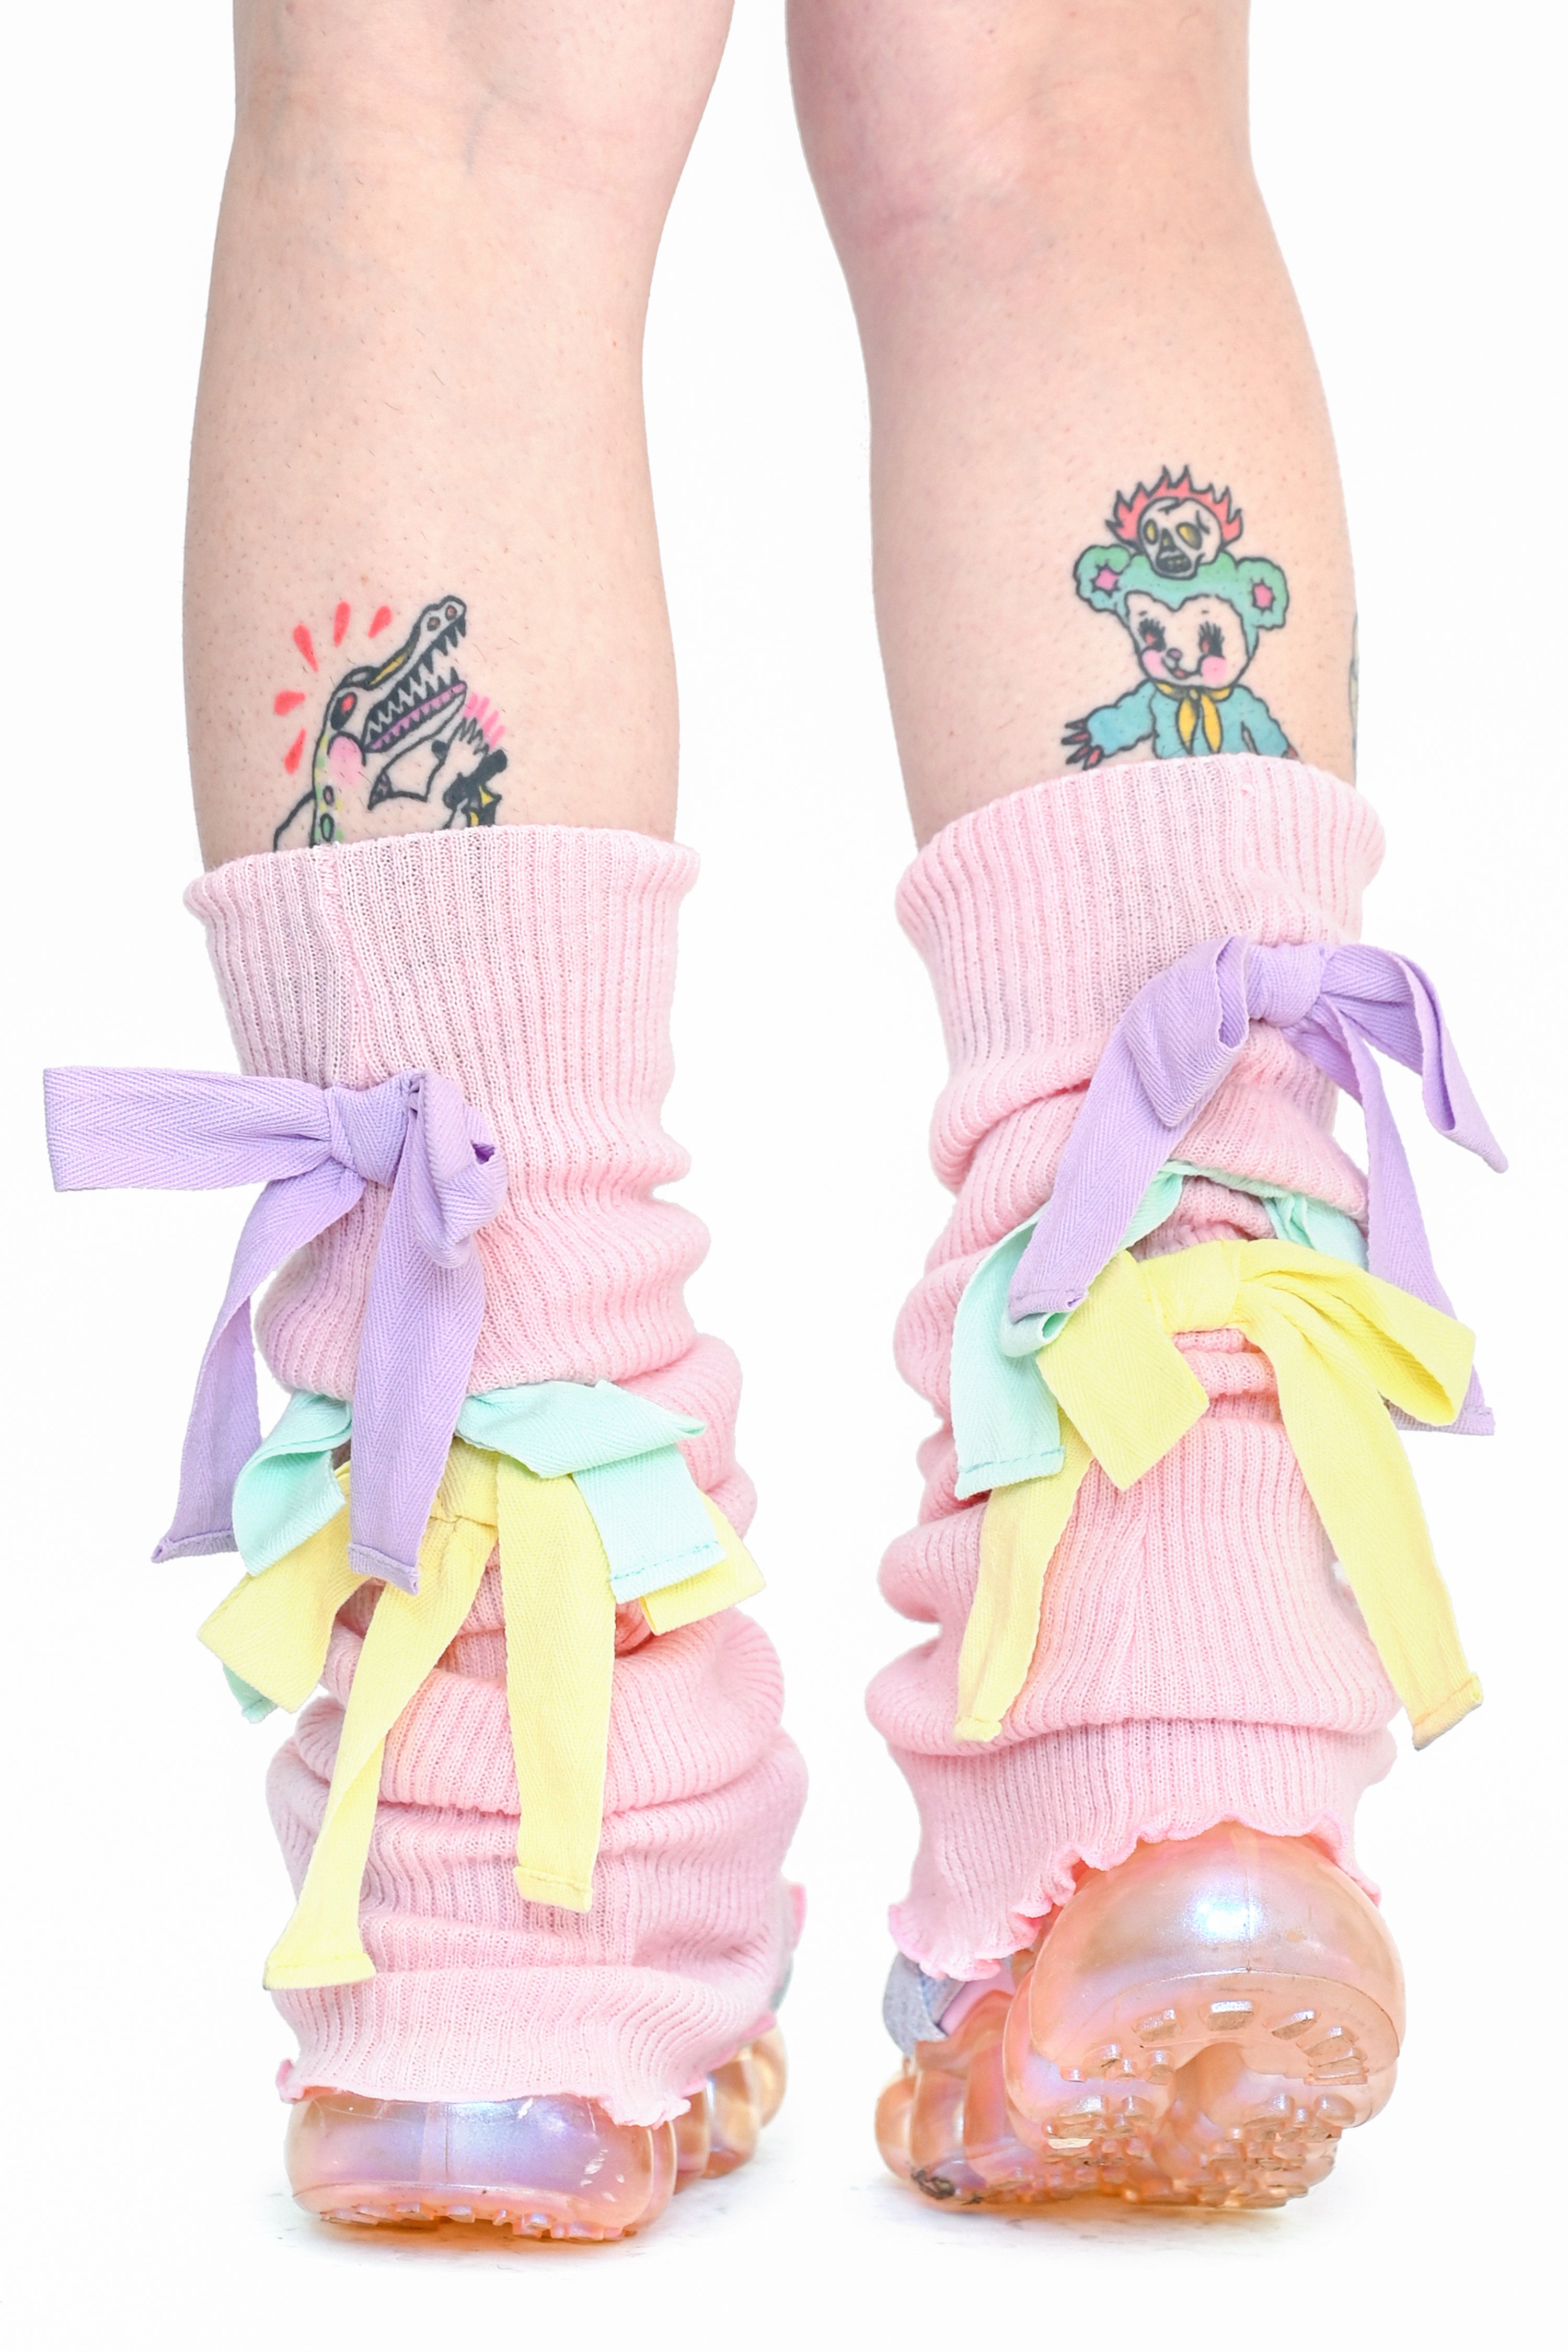 Neon Pink Elasticated Ribbon Leg Wrap & Lace Garter - Leg Warmers